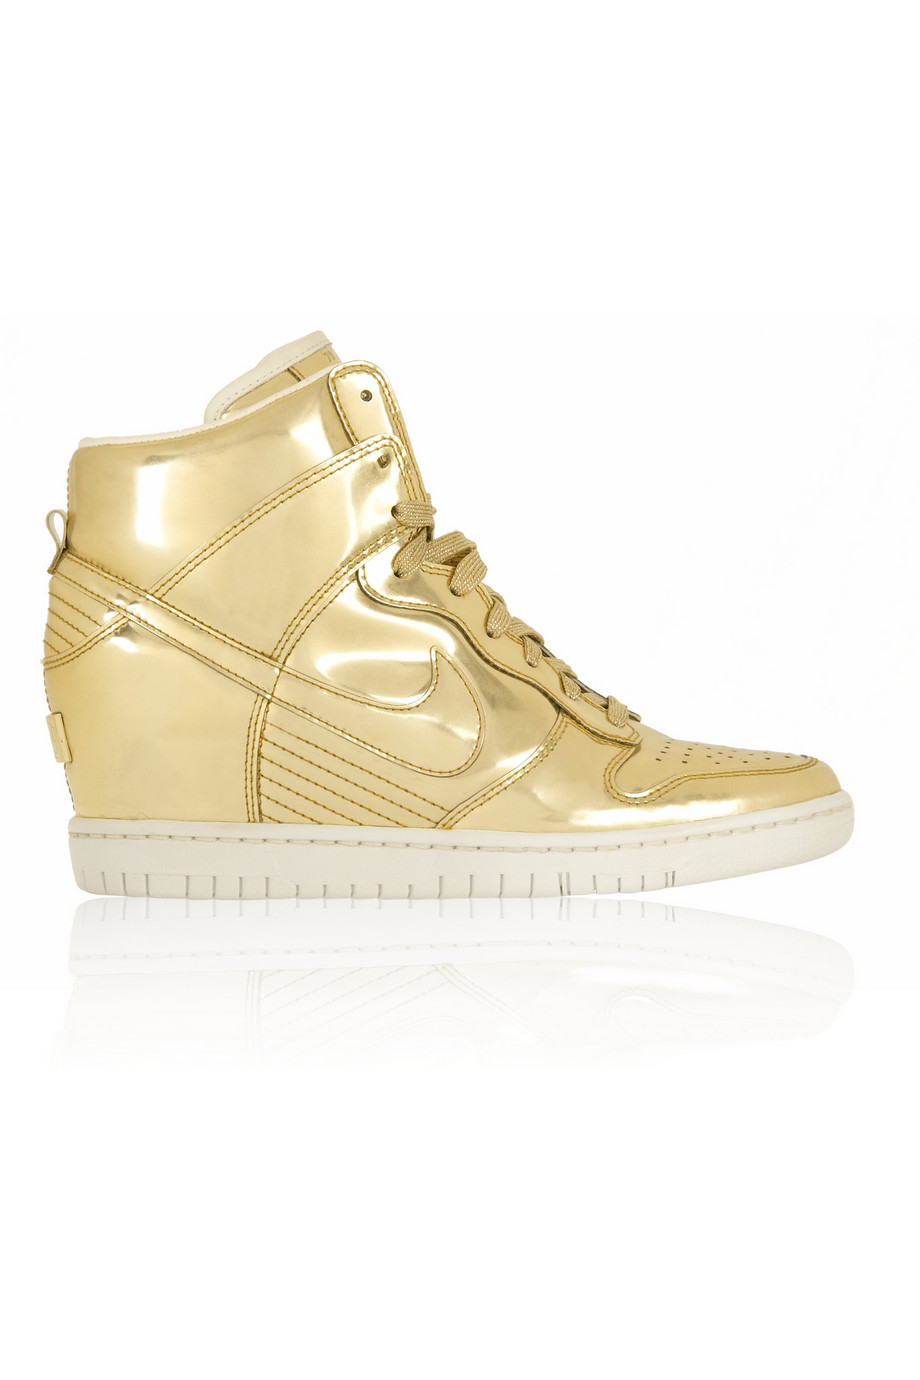 Nike Dunk Sky Hi Metallic Leather Wedge Sneakers in Gold | Lyst